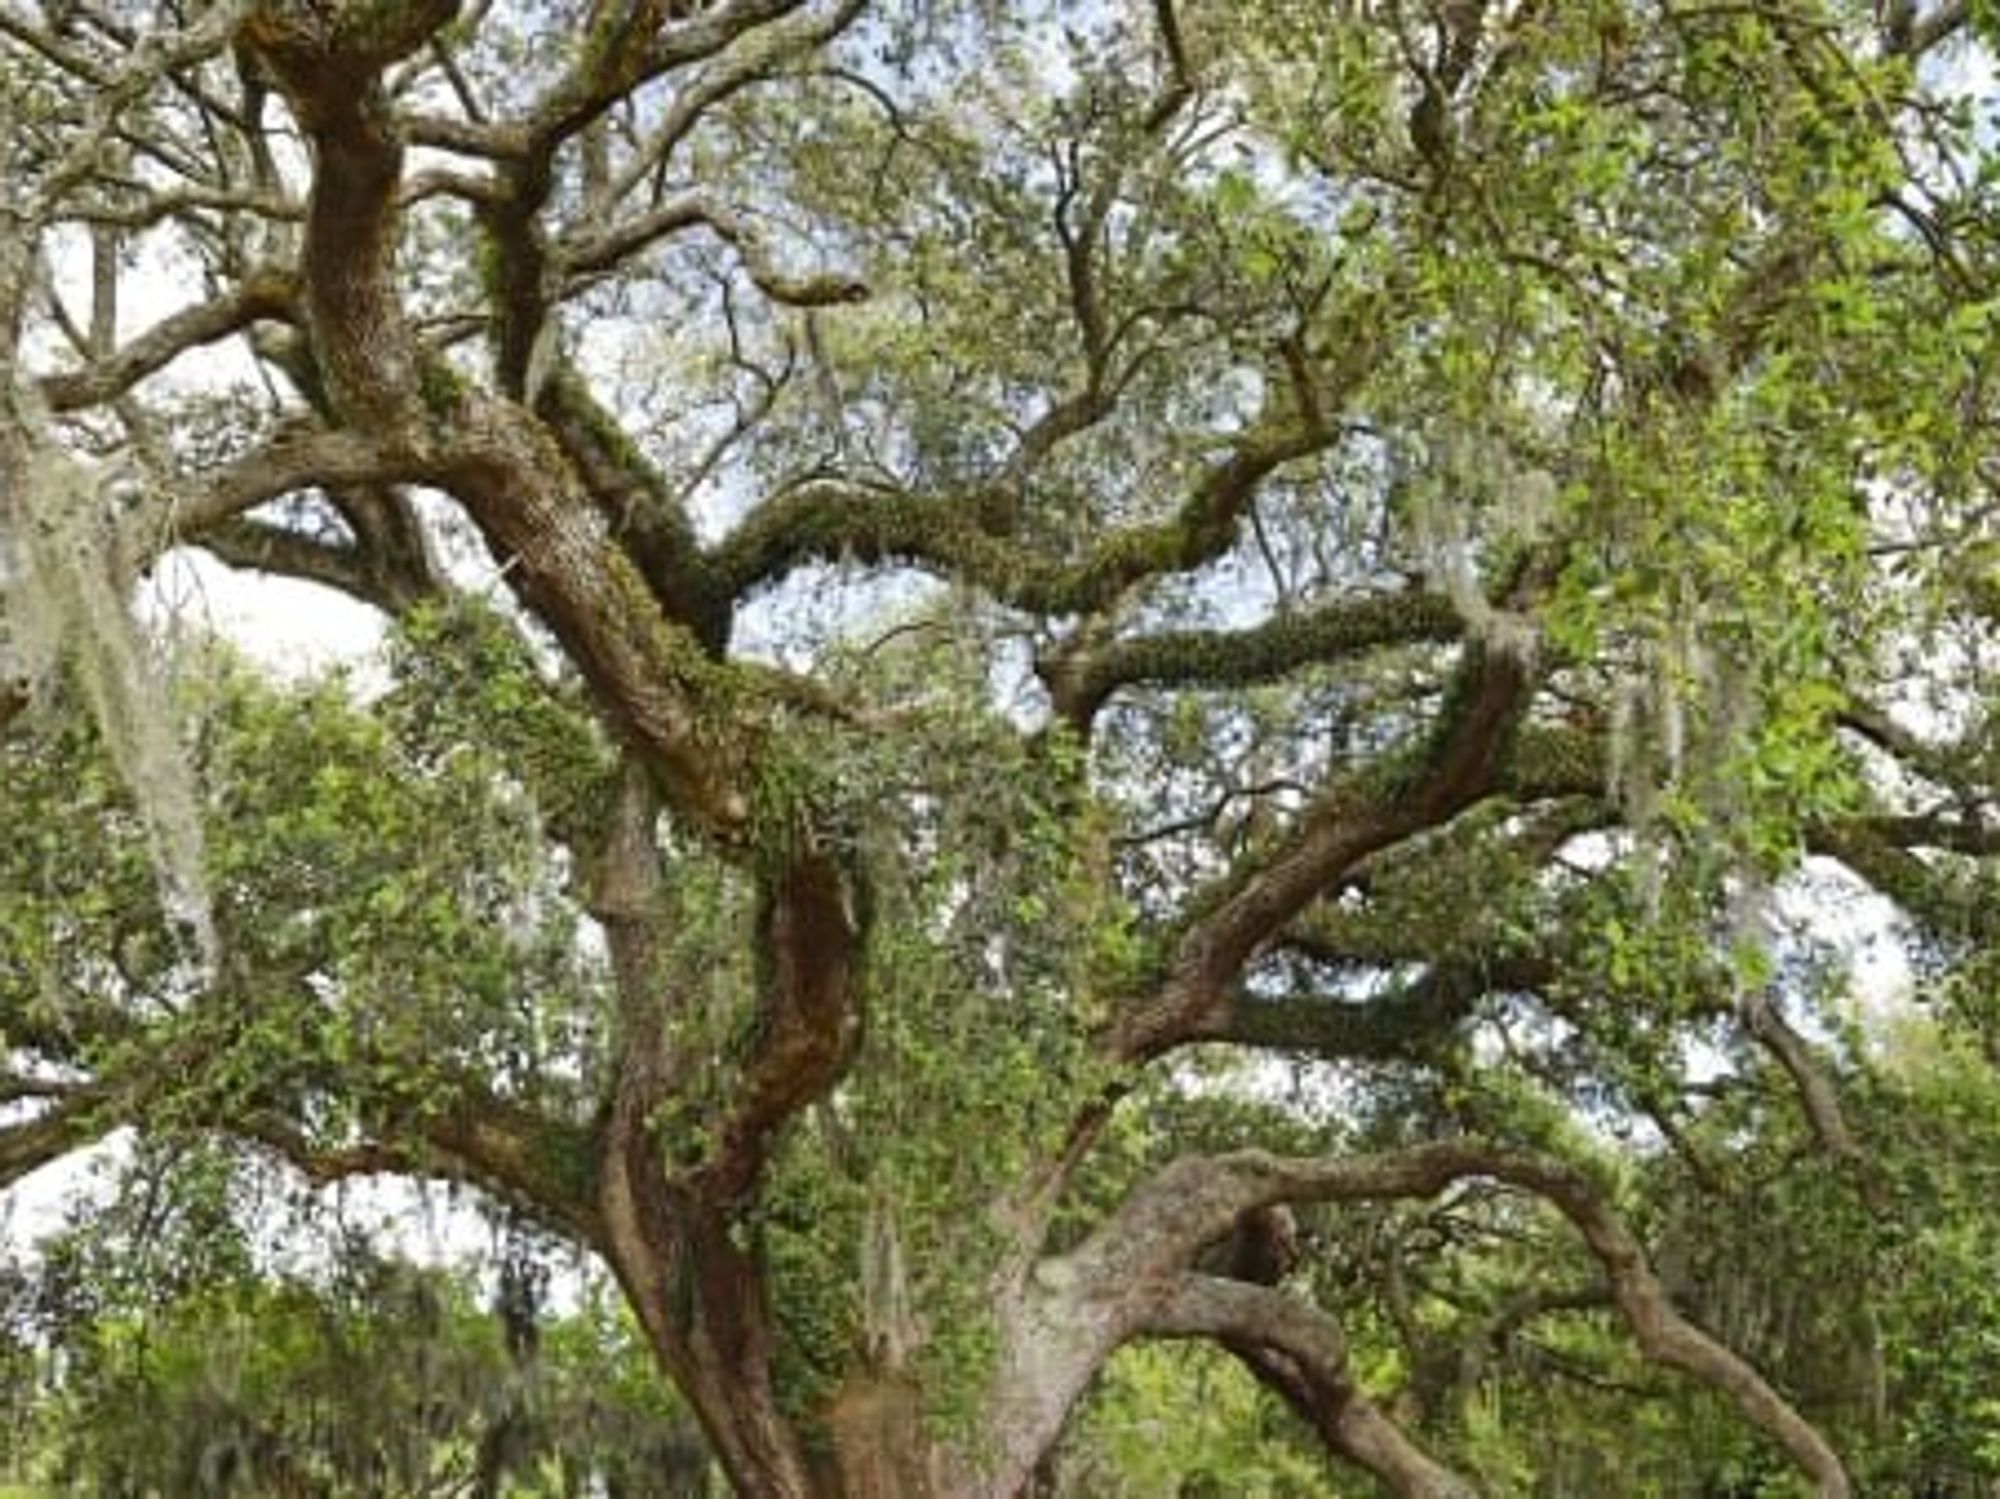 Live oak tree